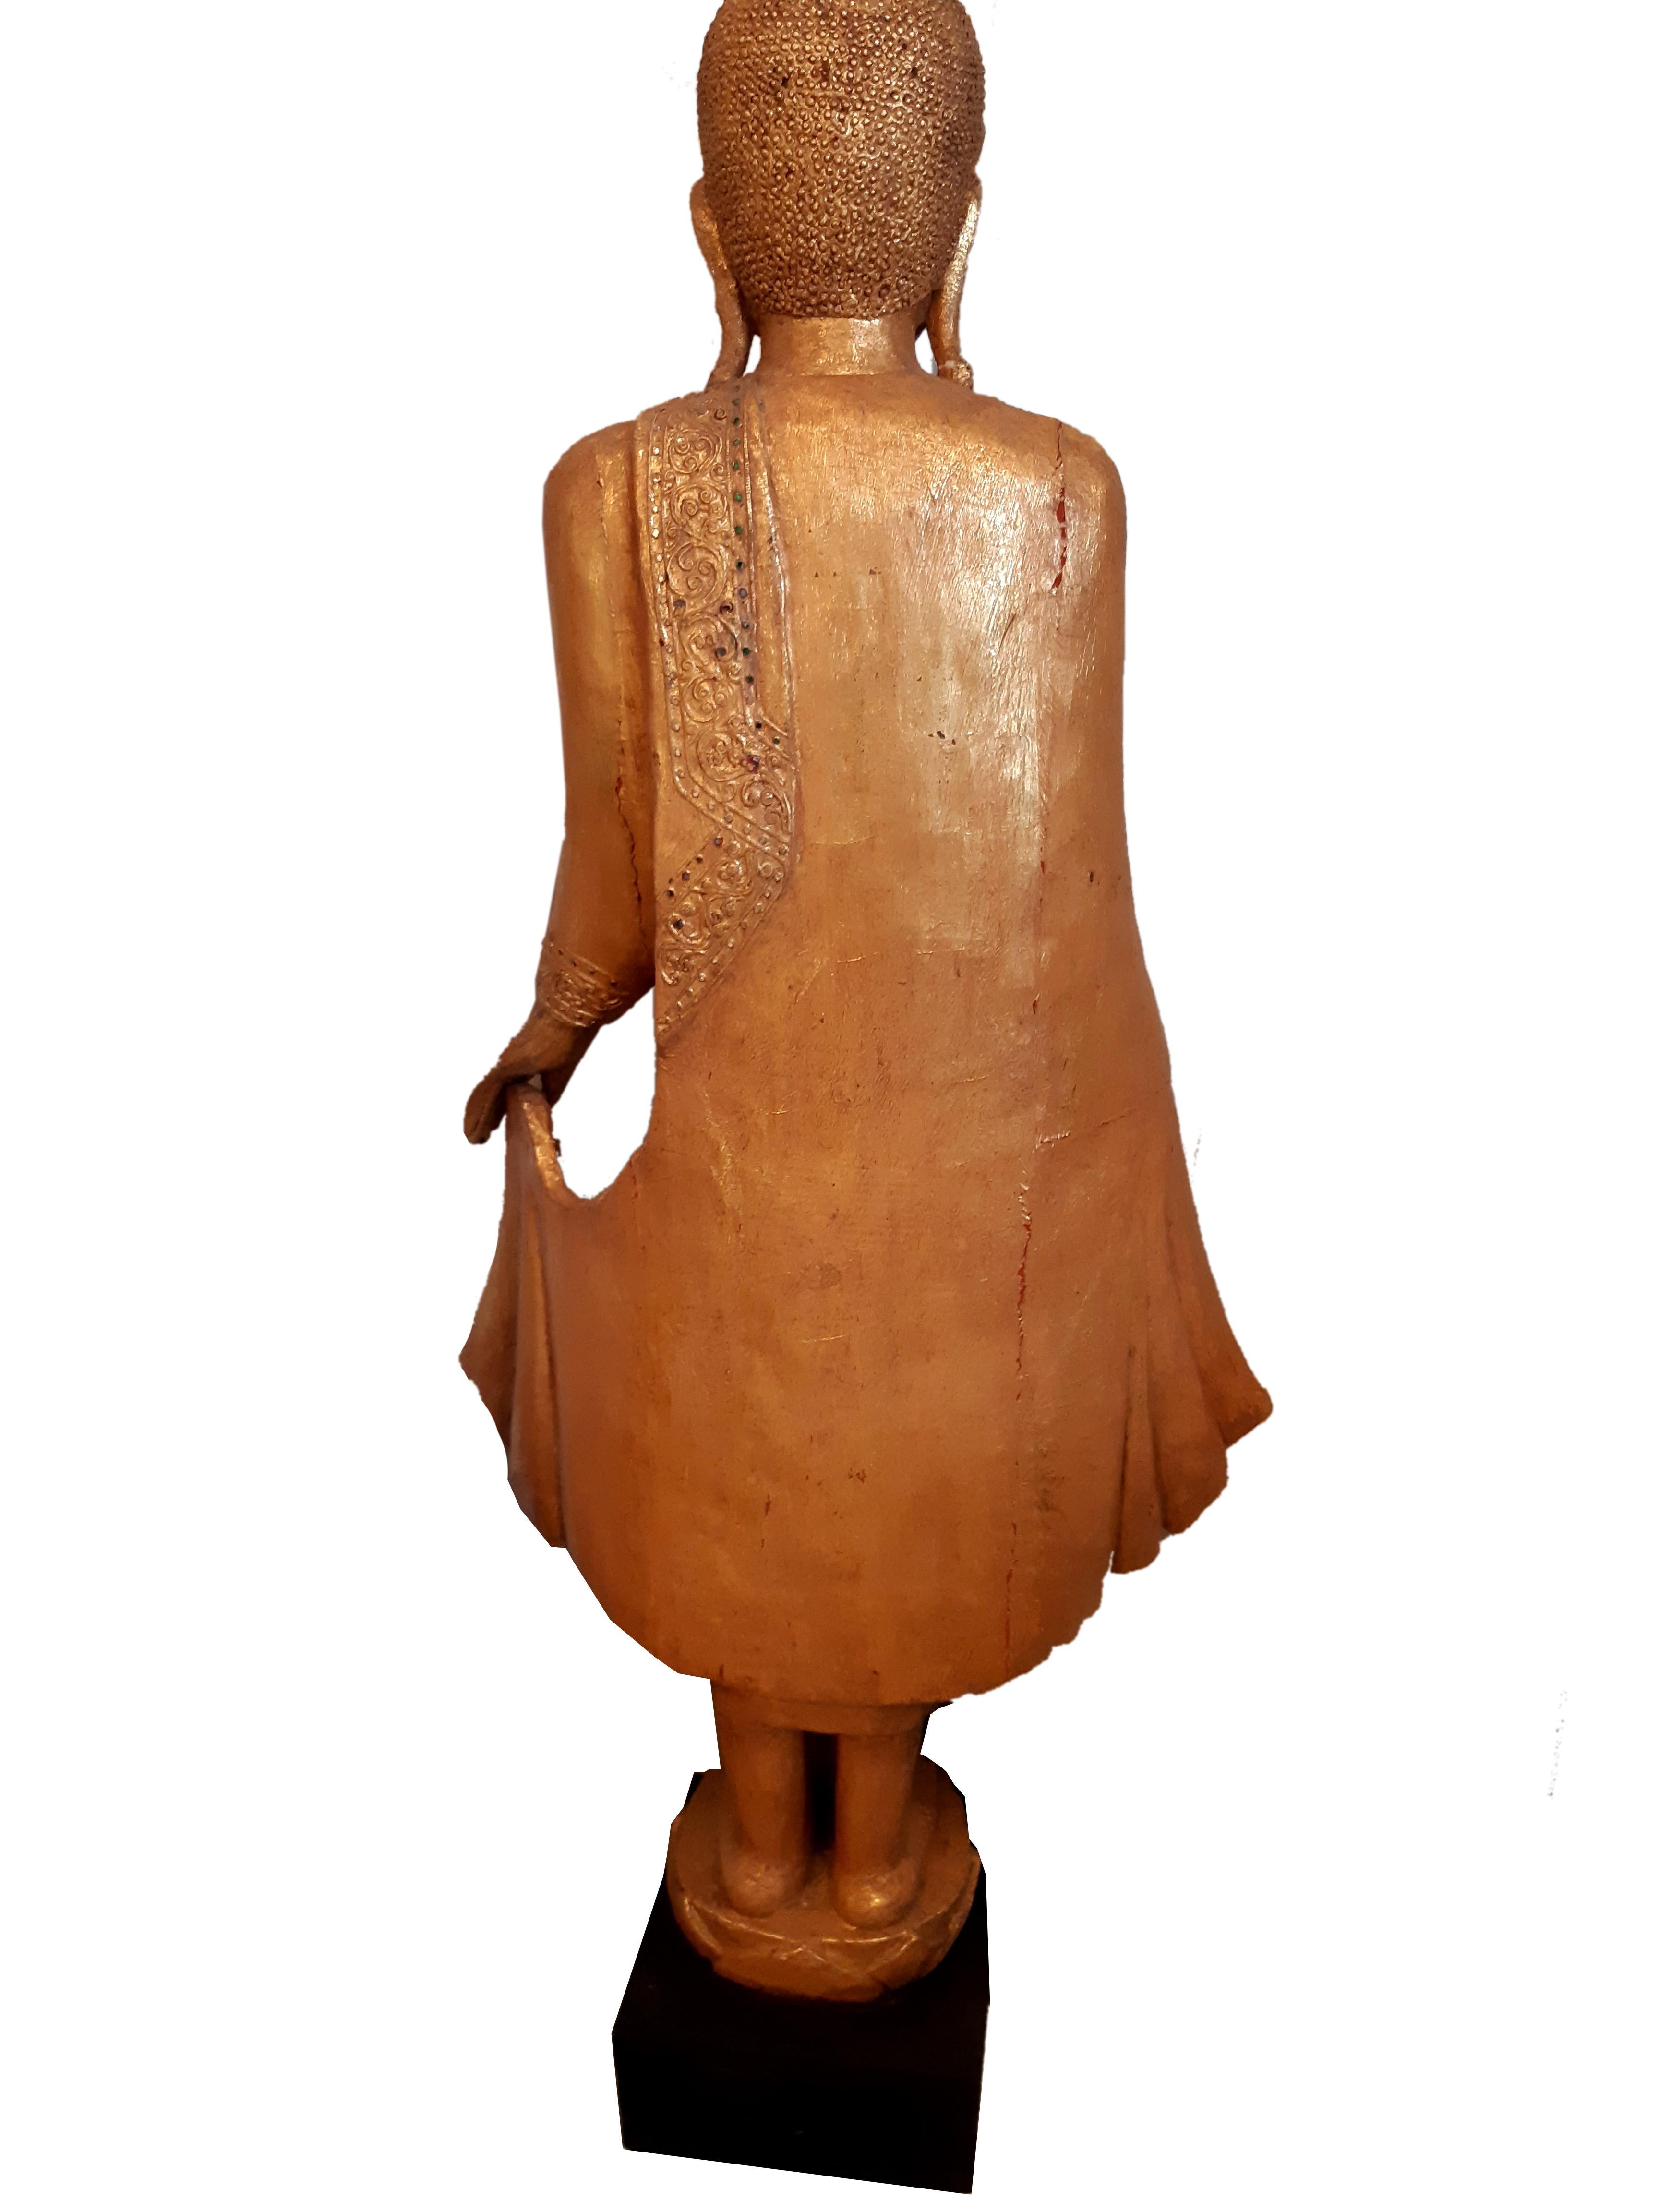 2x Skulptur Holzschnitzerei von Buddha Mandalay / Birma For Sale 6